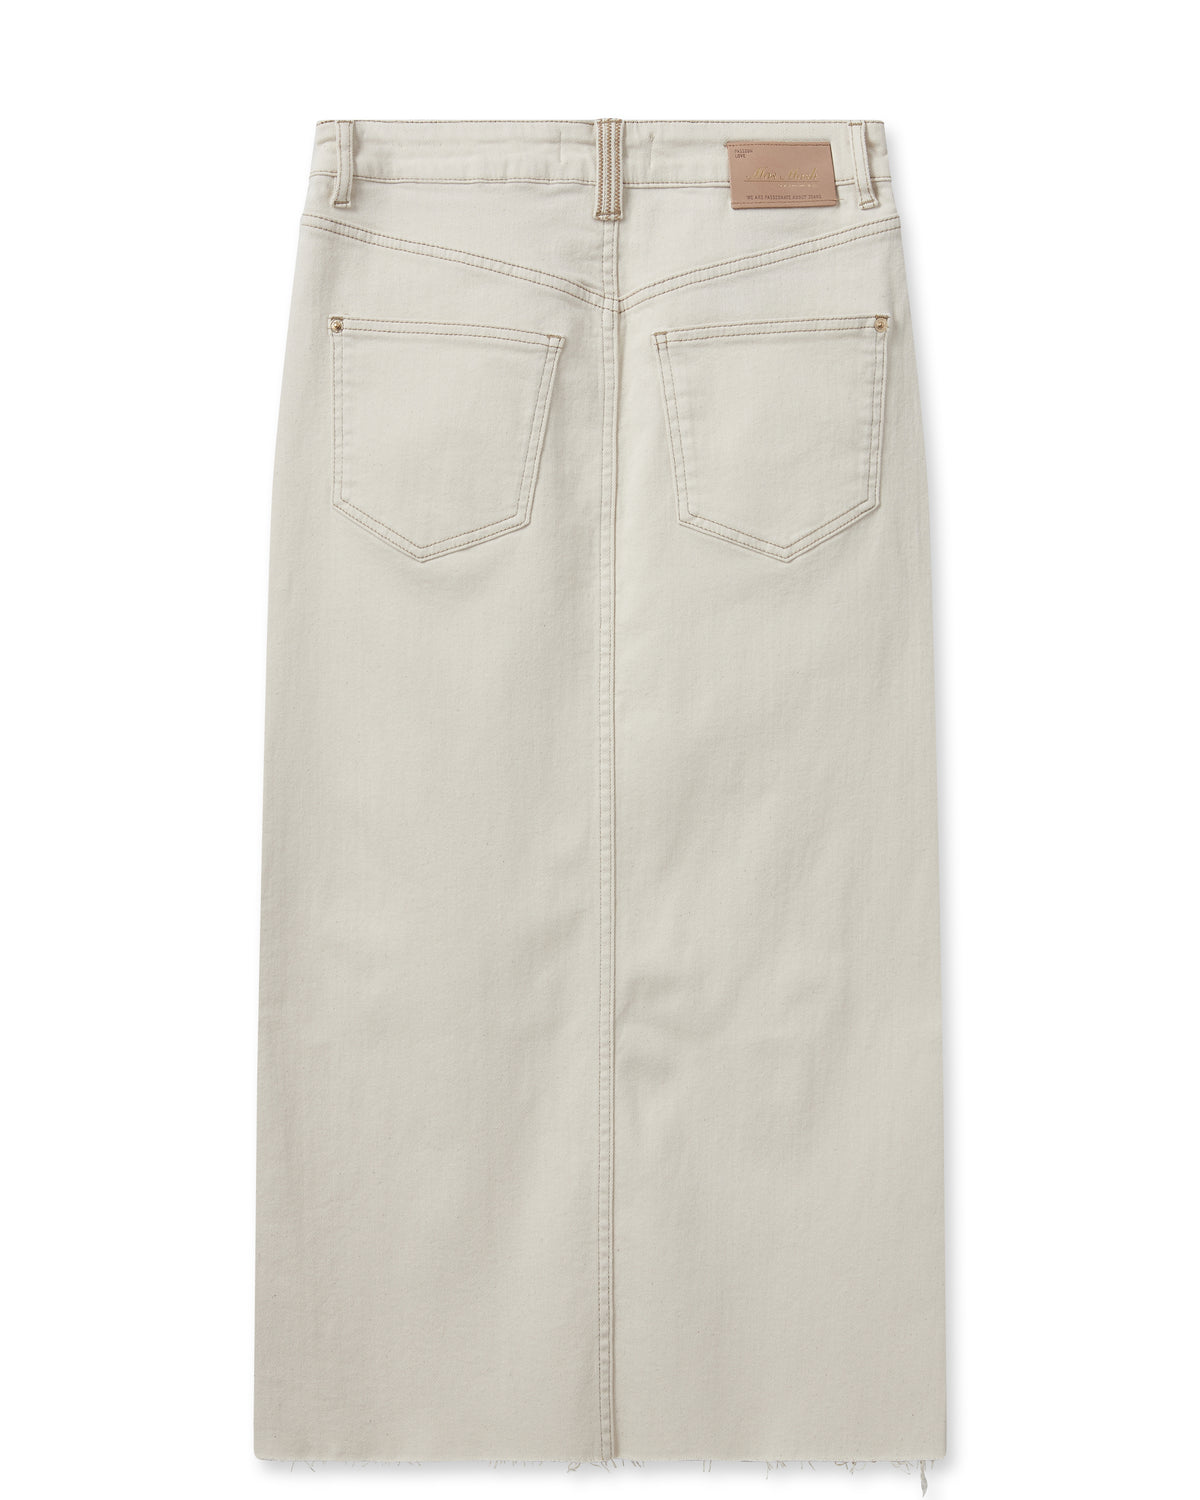 Ecru denim midi skirt with front centre split and classic five pocket design